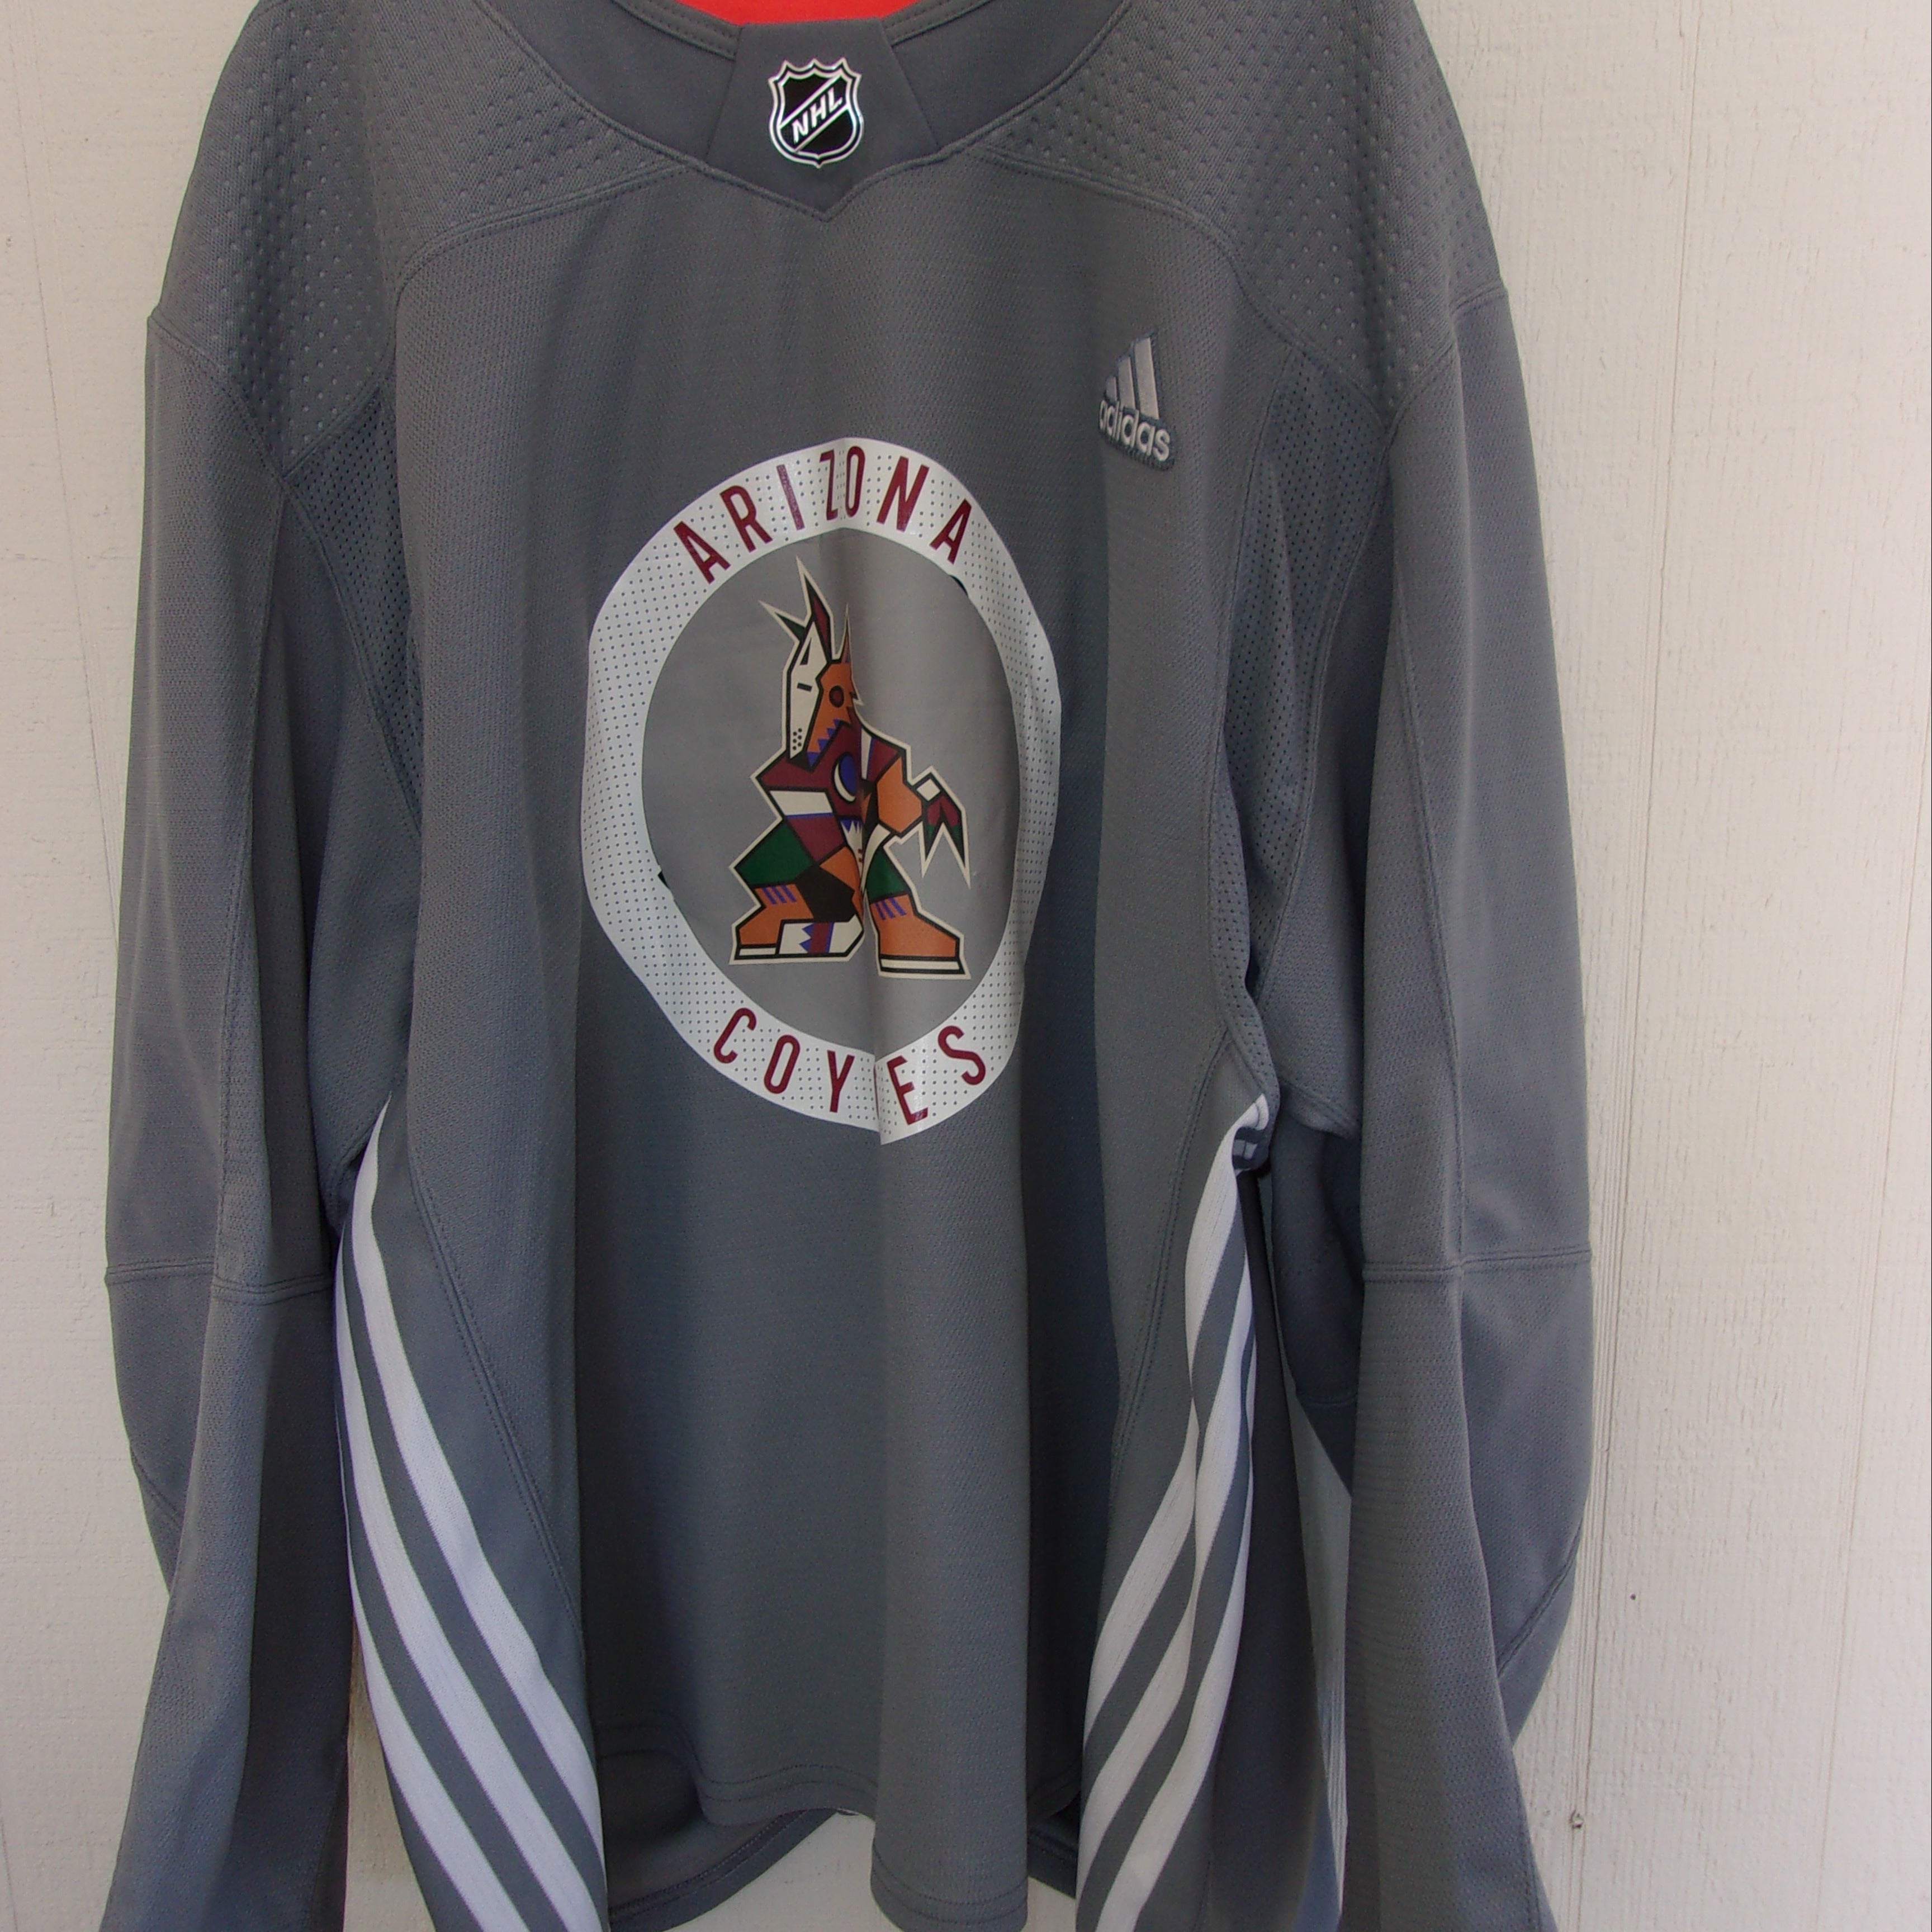 Arizona Coyotes unused gray Adidas #94 practice jersey w/Kachina